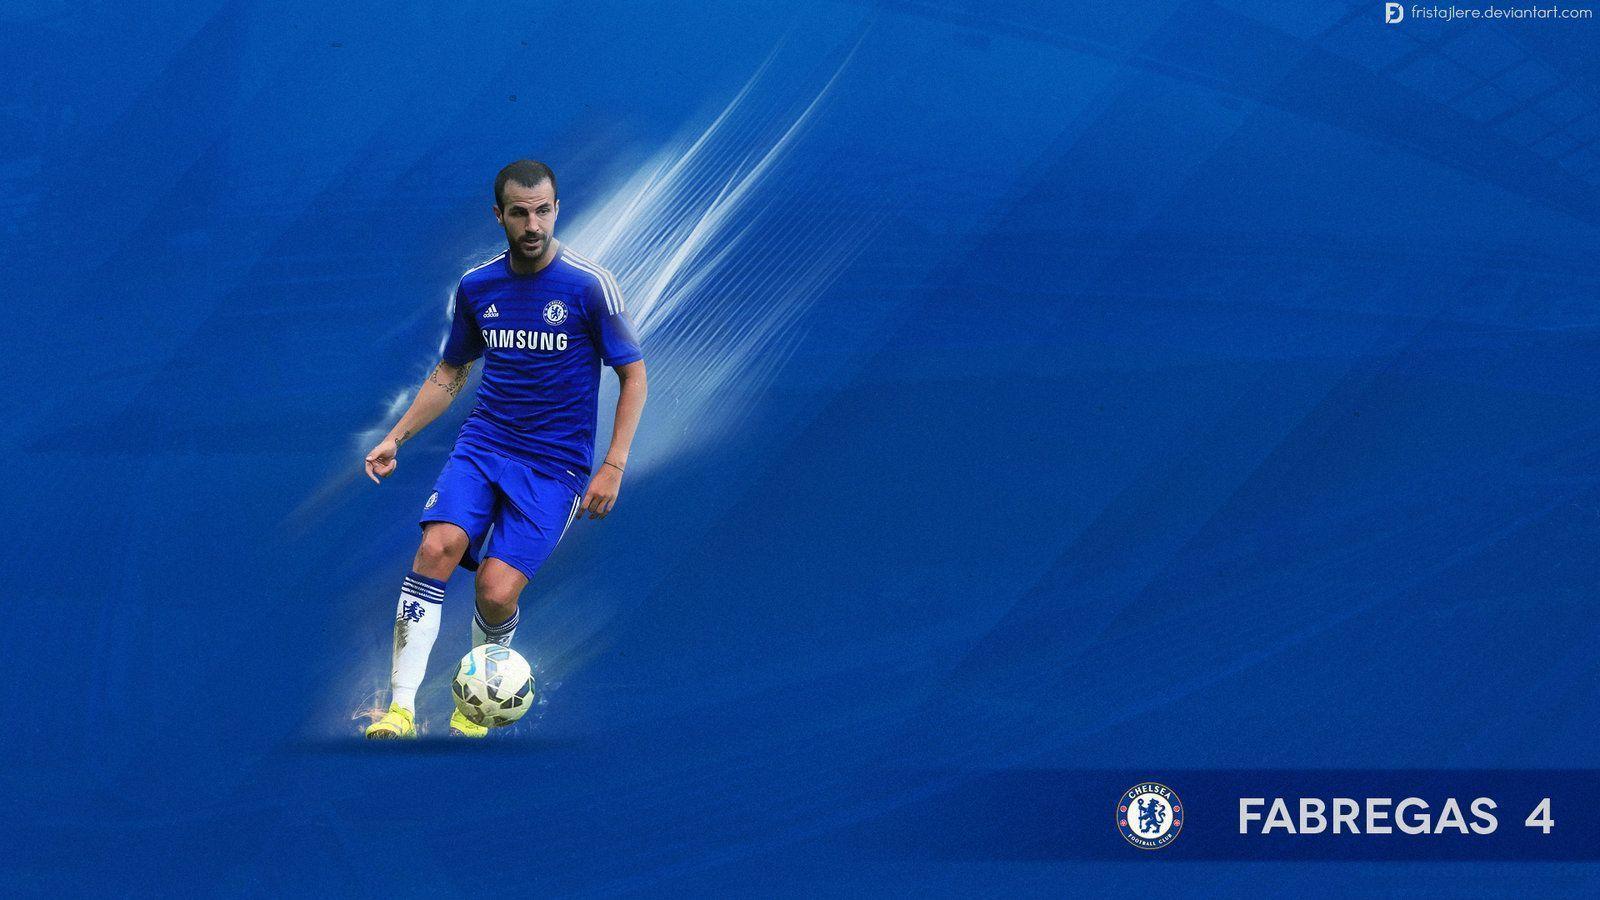 Cesc Fabregas Chelsea 2015 Wallpaper. The Stadium. The